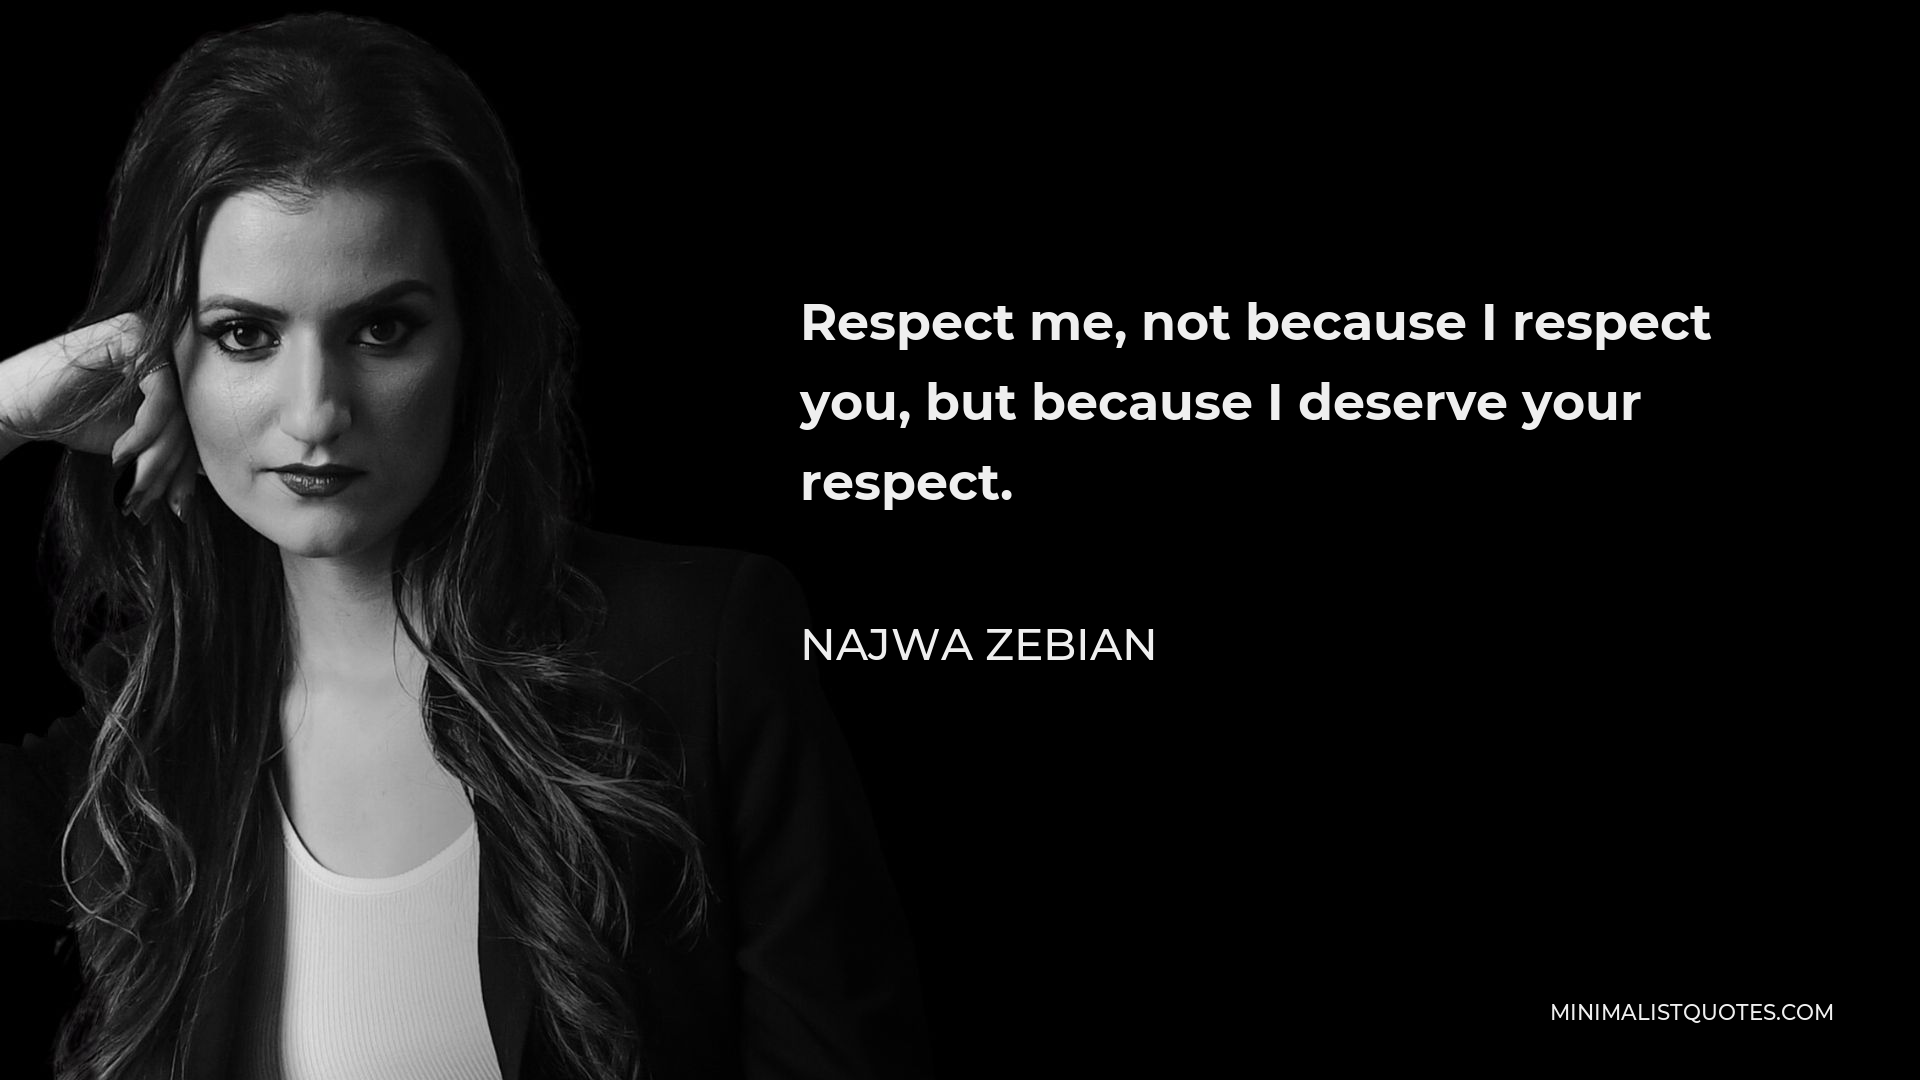 Najwa Zebian Quote - Respect me, not because I respect you, but because I deserve your respect.